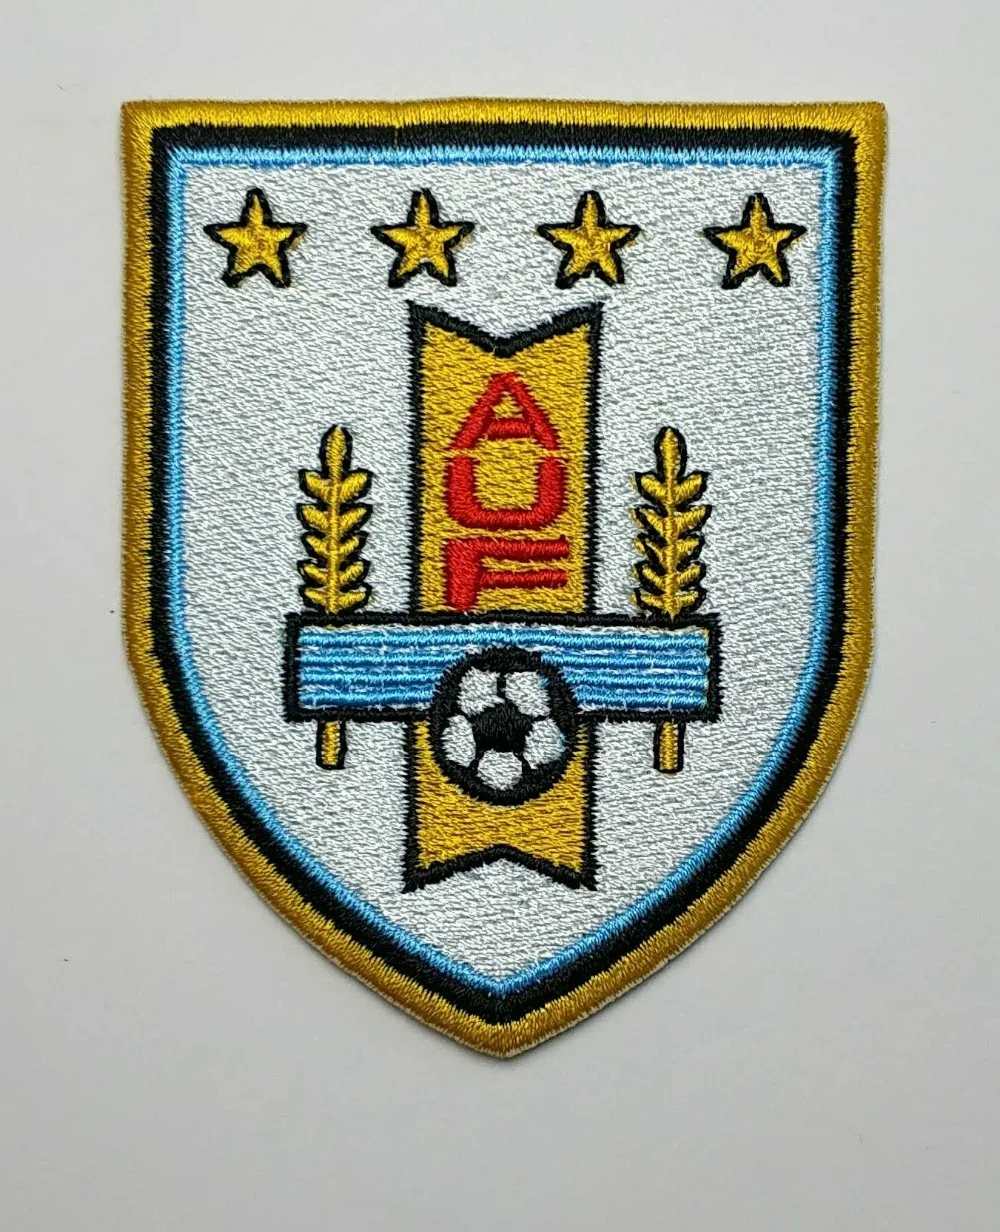 Aufnäher Patch Fußball Football club Plzen Viktoria soccer Iron on badge logo 